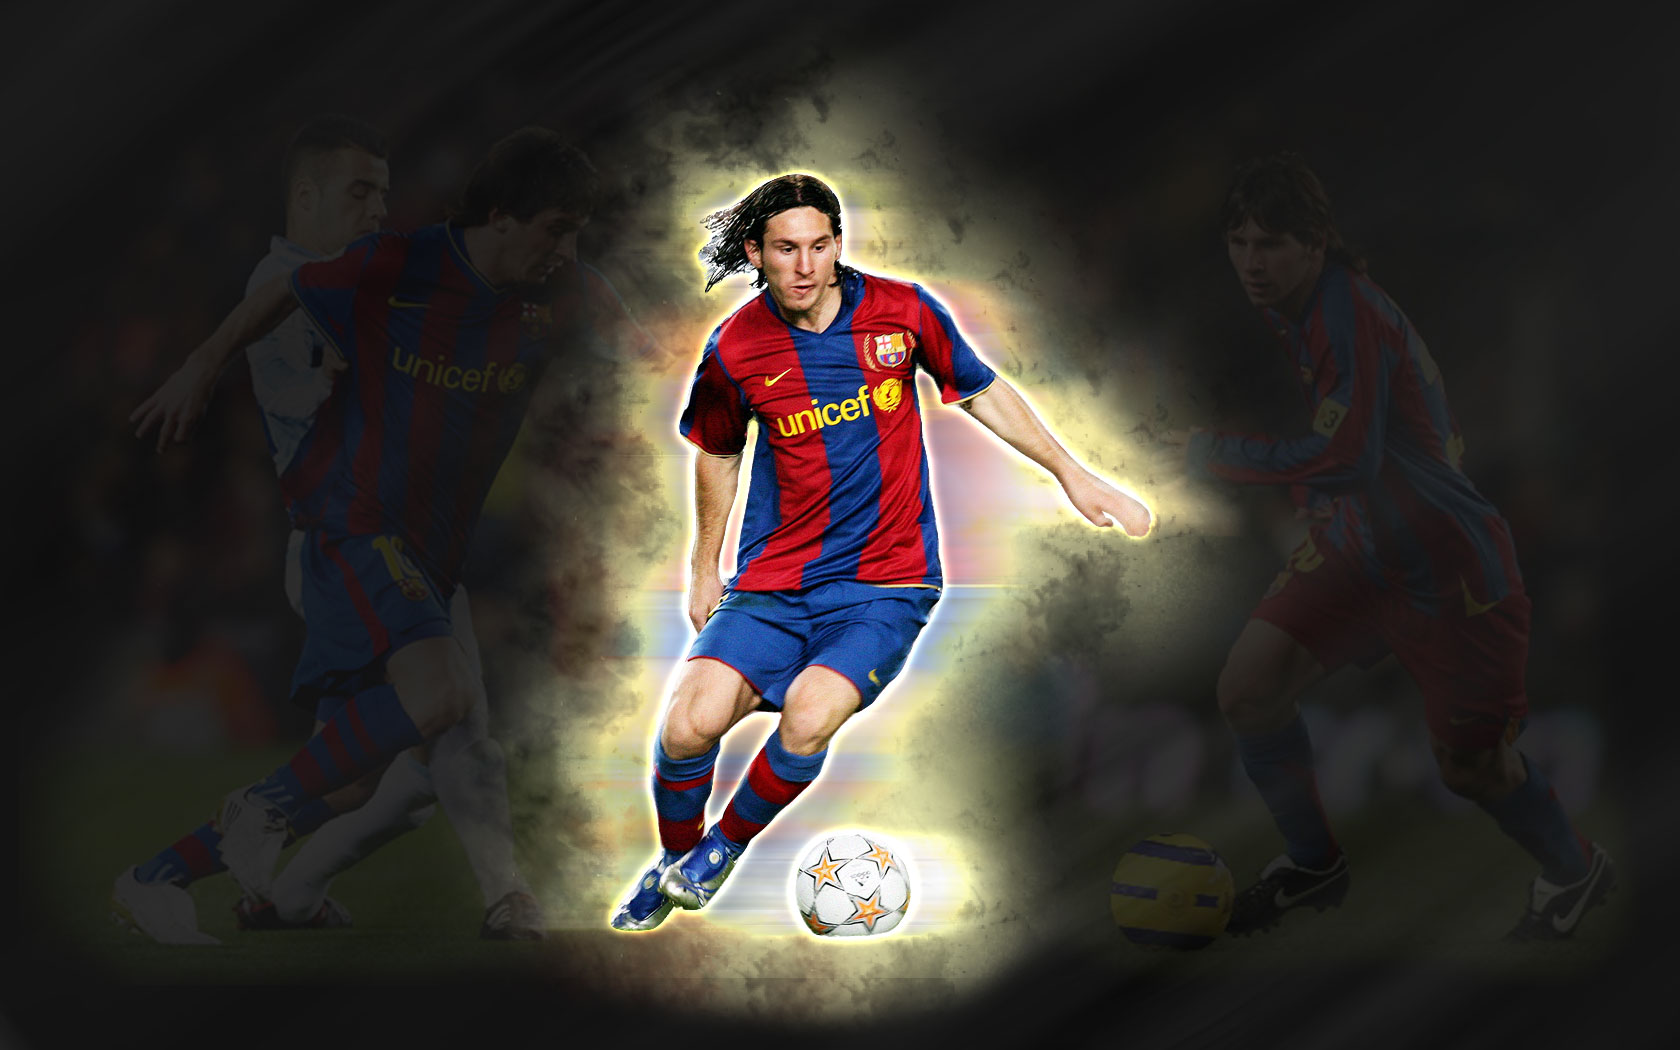 Lionel Messi wallpaper 2 by cesaraquino on DeviantArt